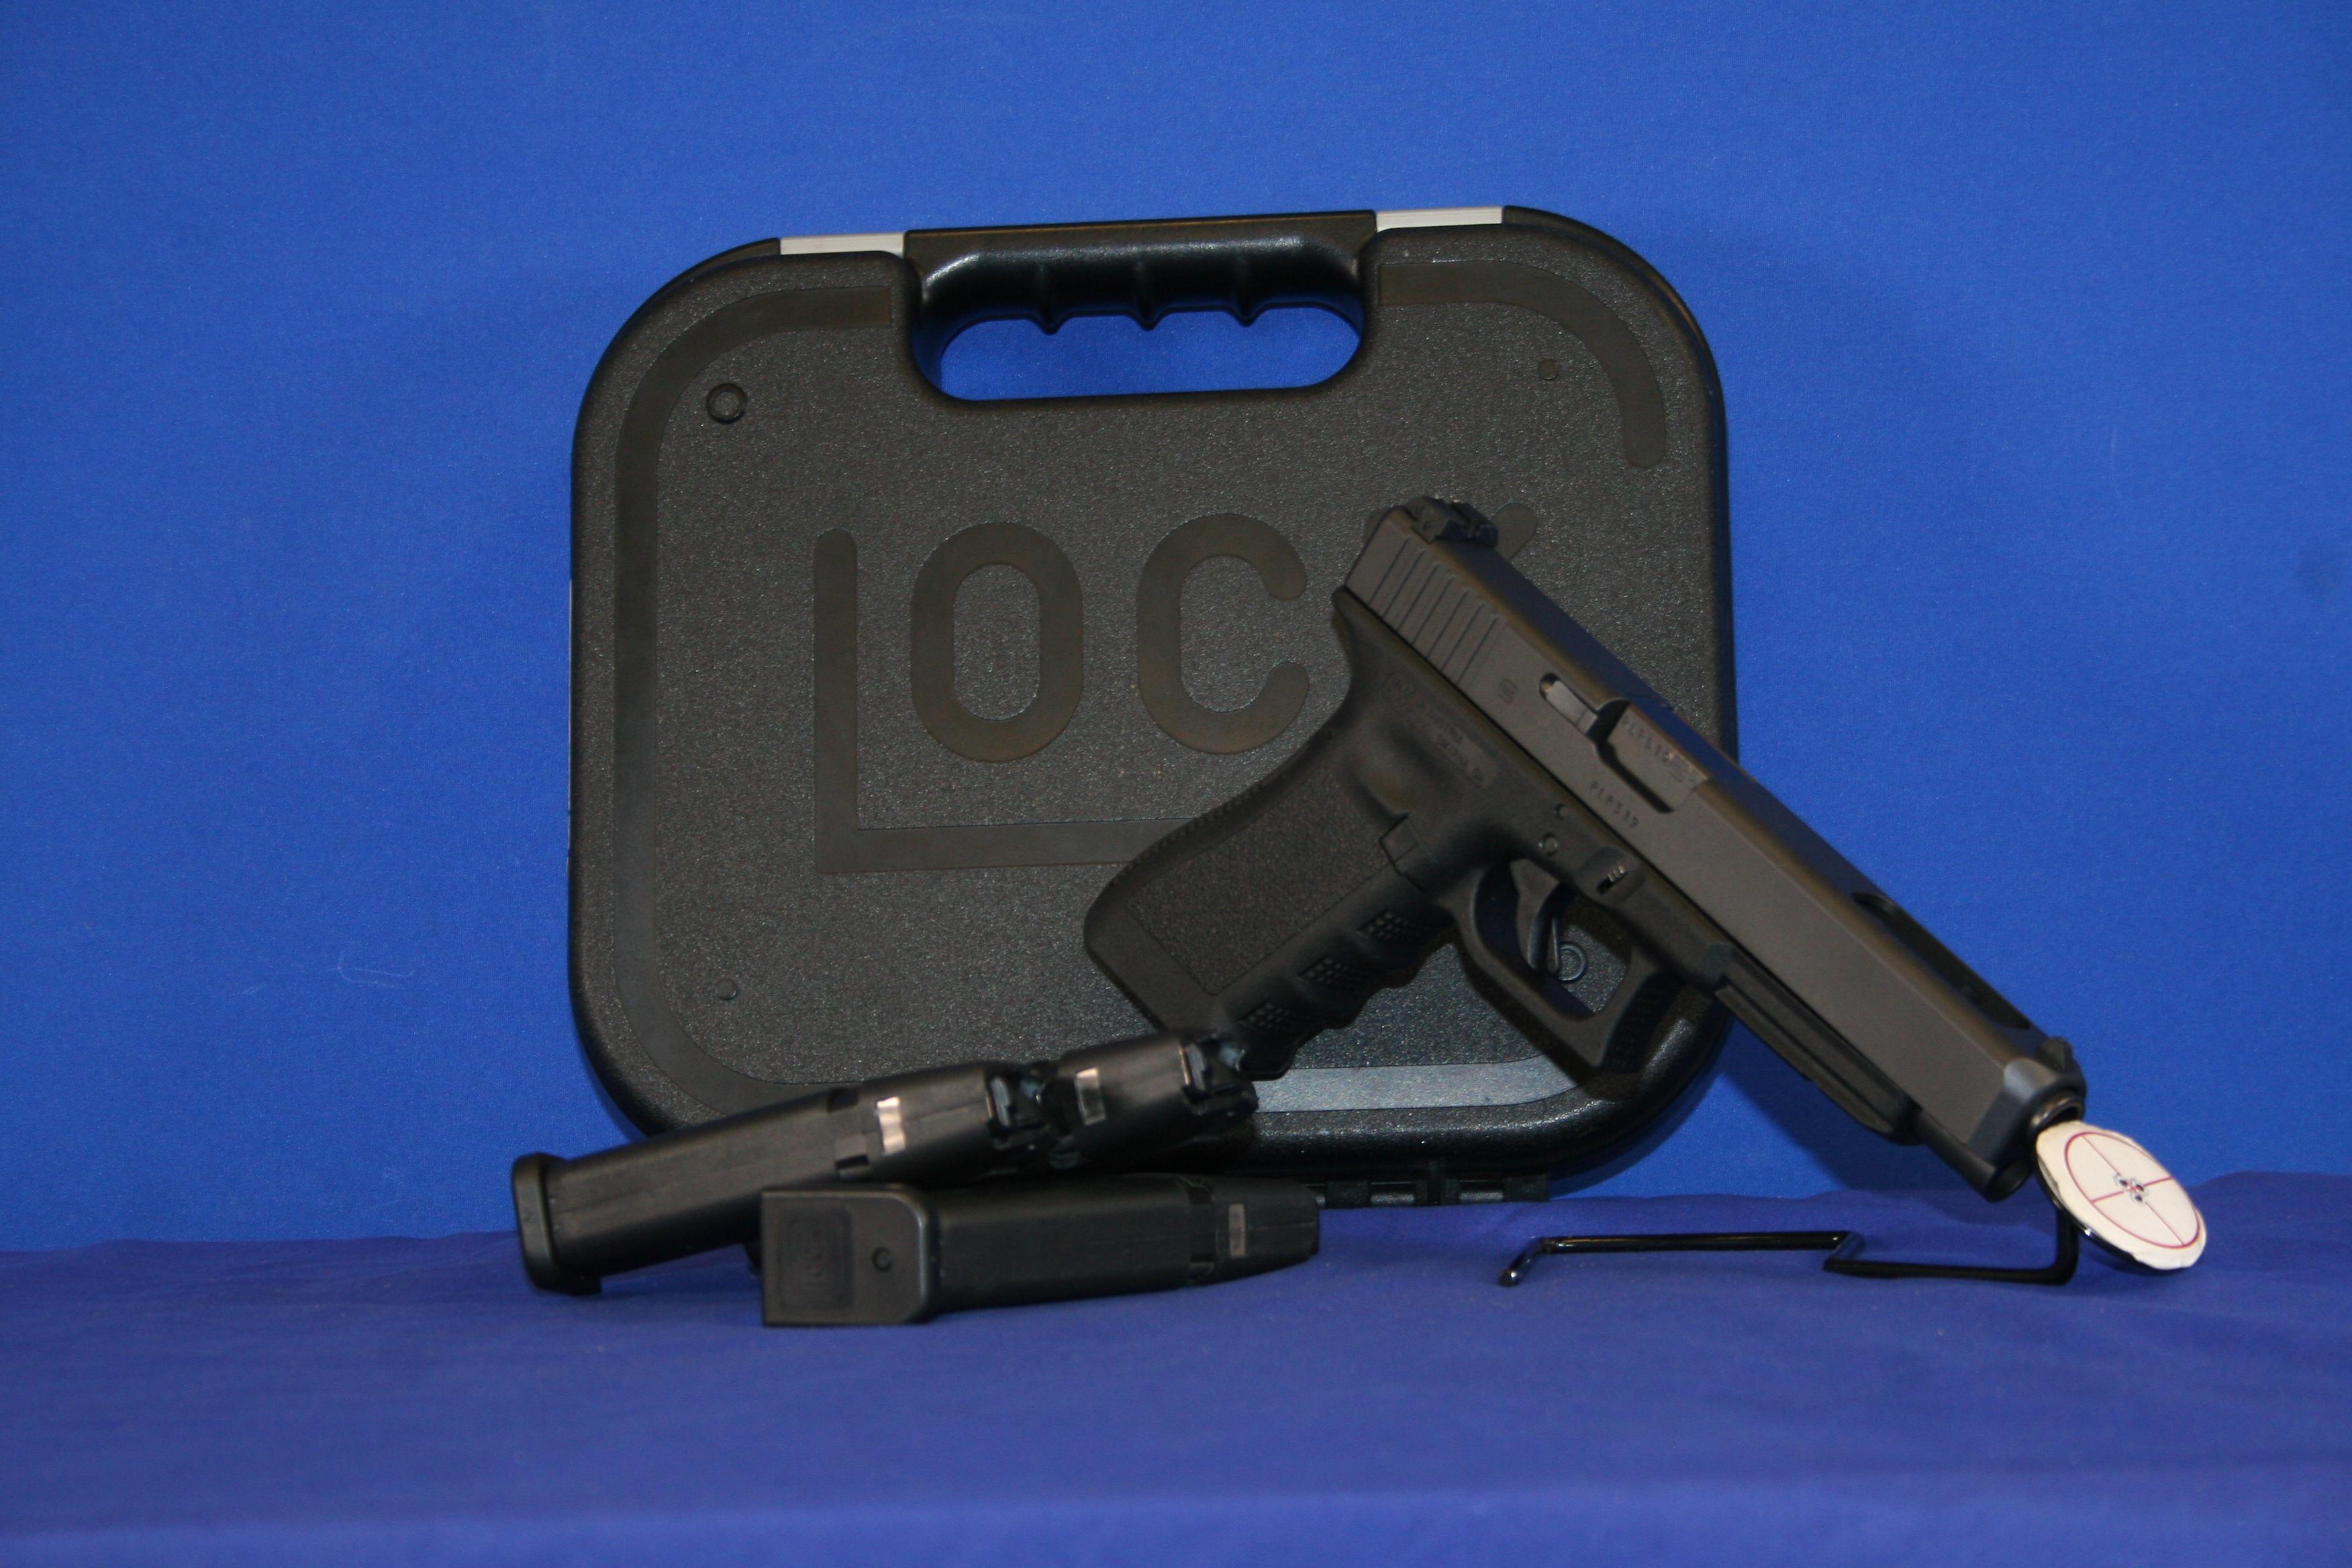 Glock 35 40 S&W 5" Barrel, with Three 10-Round Magazines. SN# RLR519. OK for sale in California.